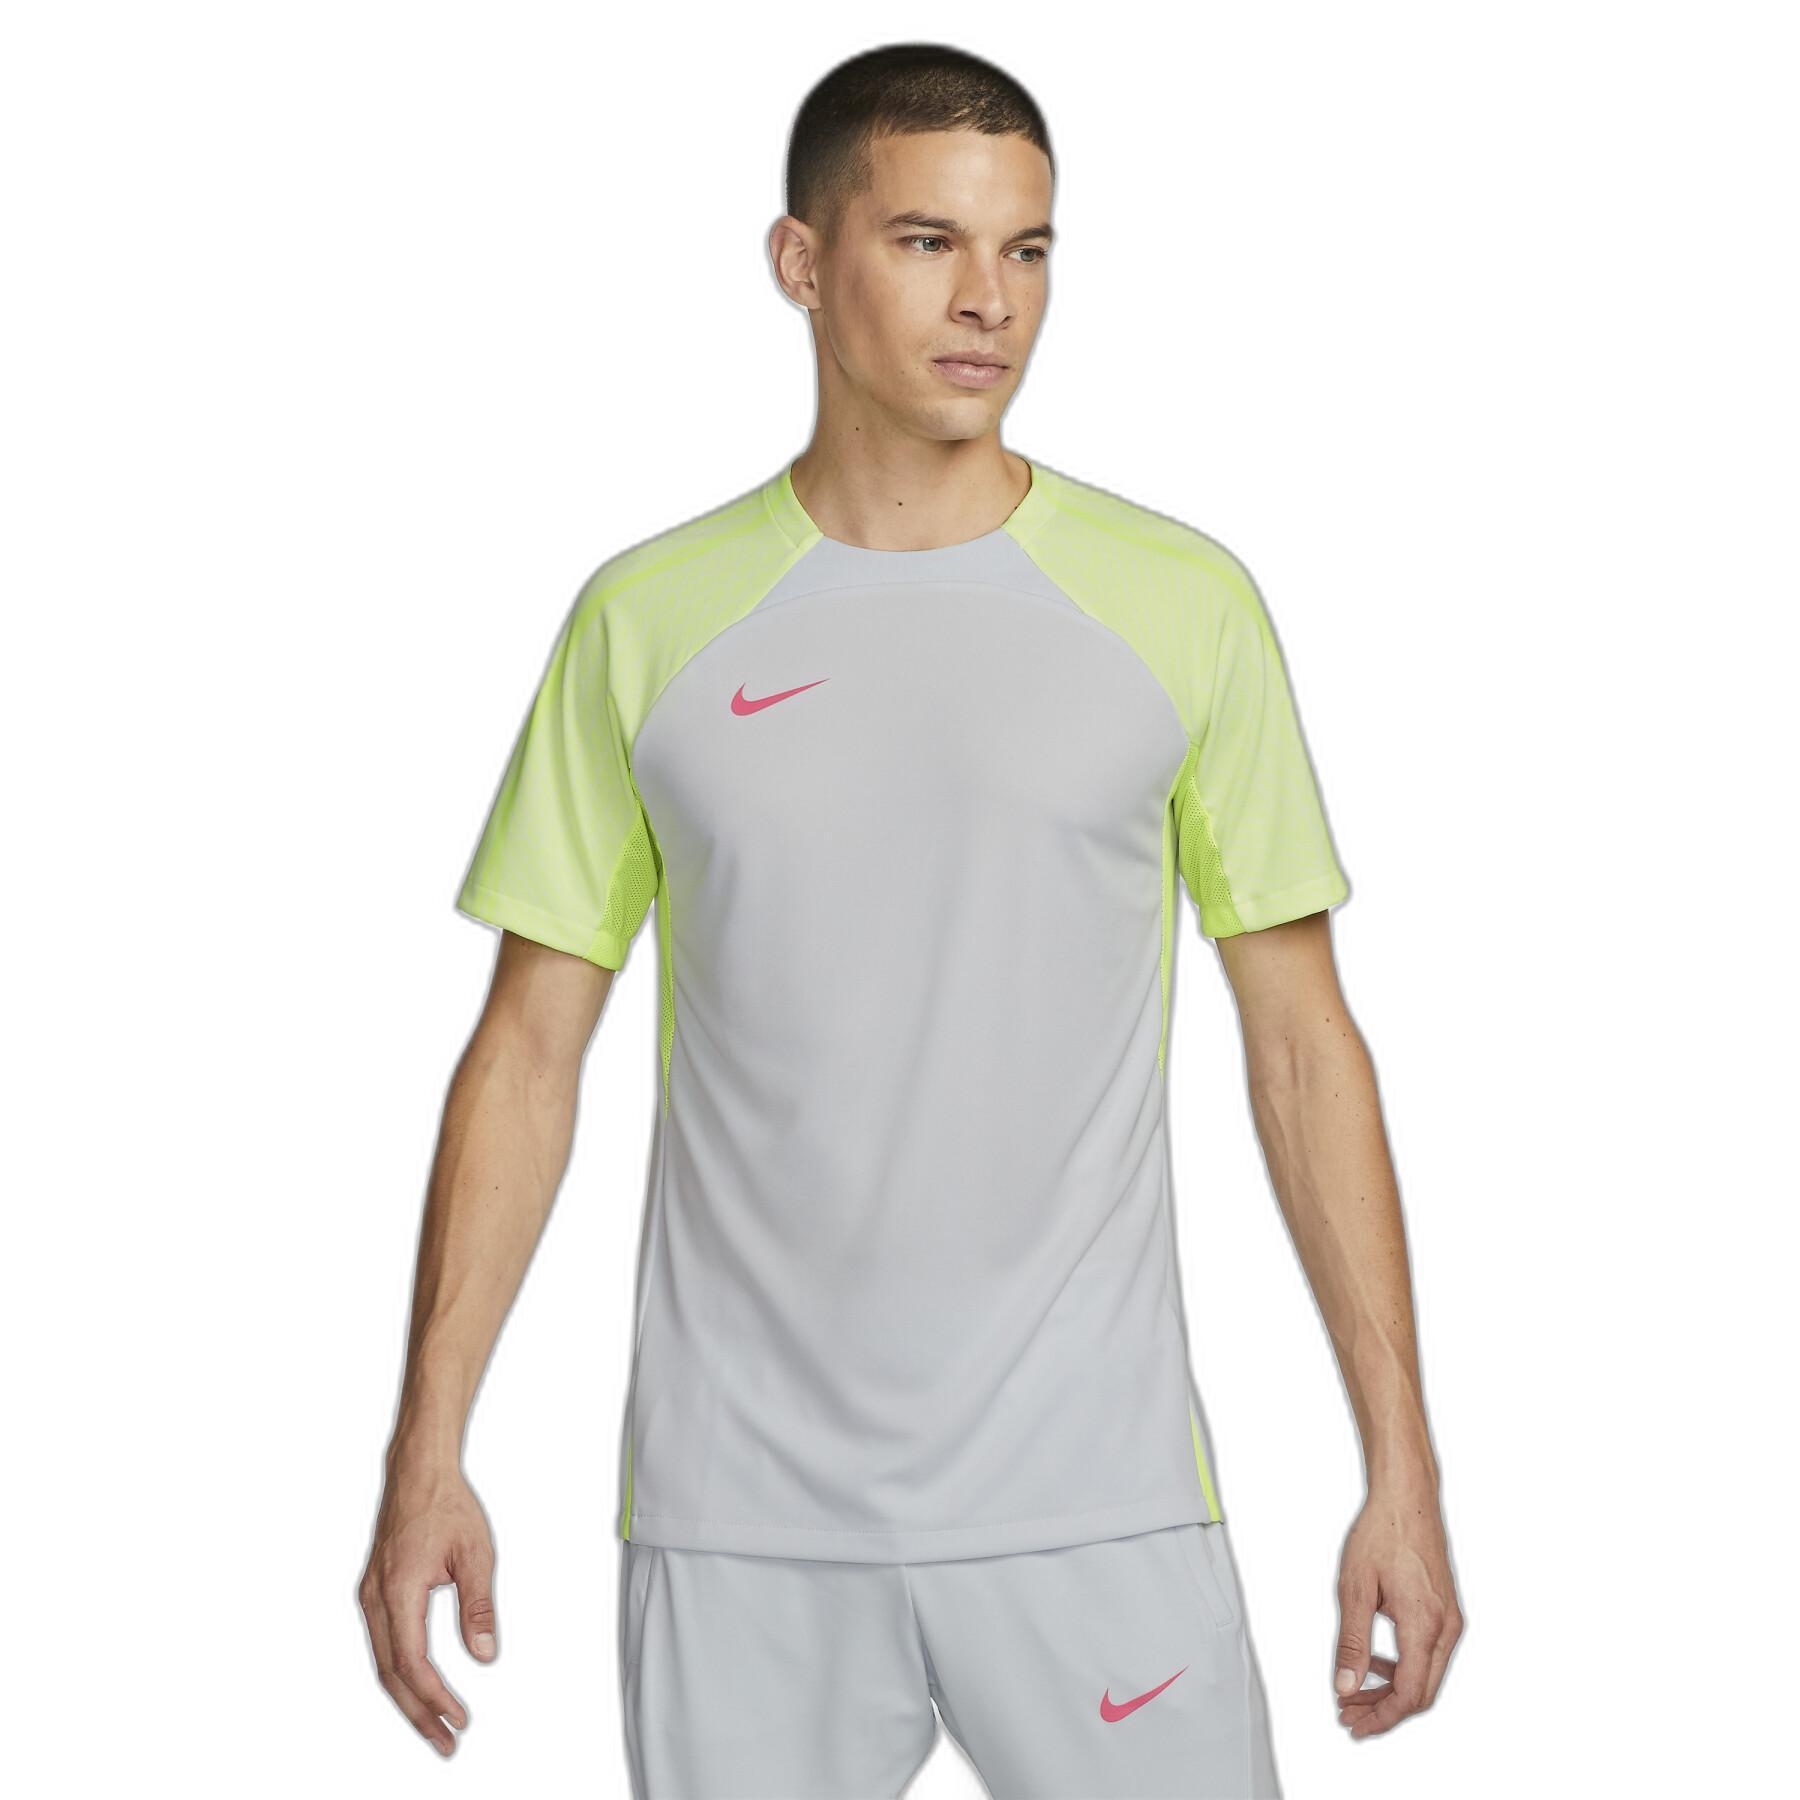 Koszulka Nike Dri-FIT Strike